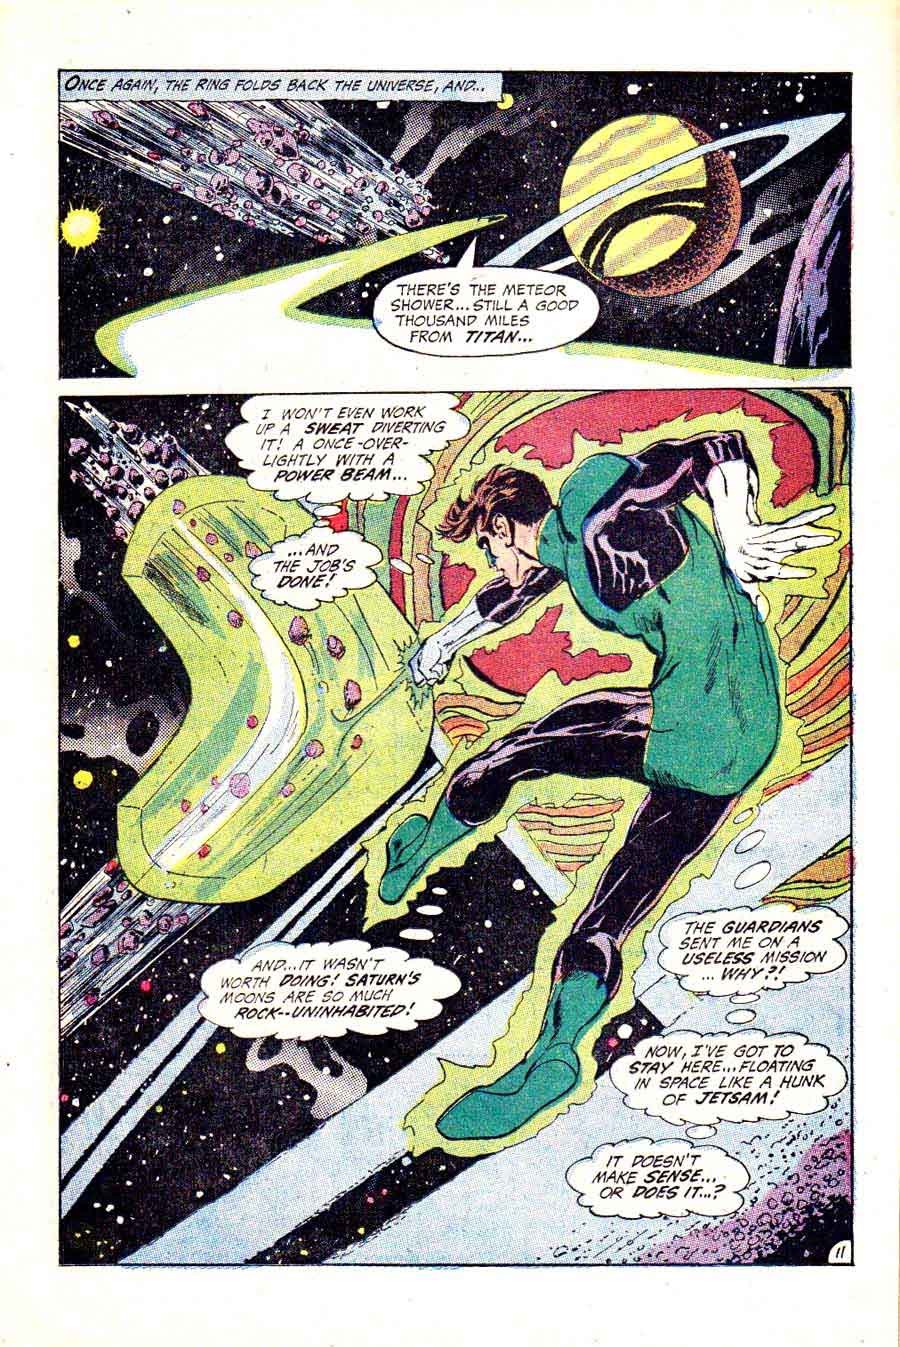 Green Lantern Green Arrow #76 bronze age 1970s dc comic book page art by Neal Adams